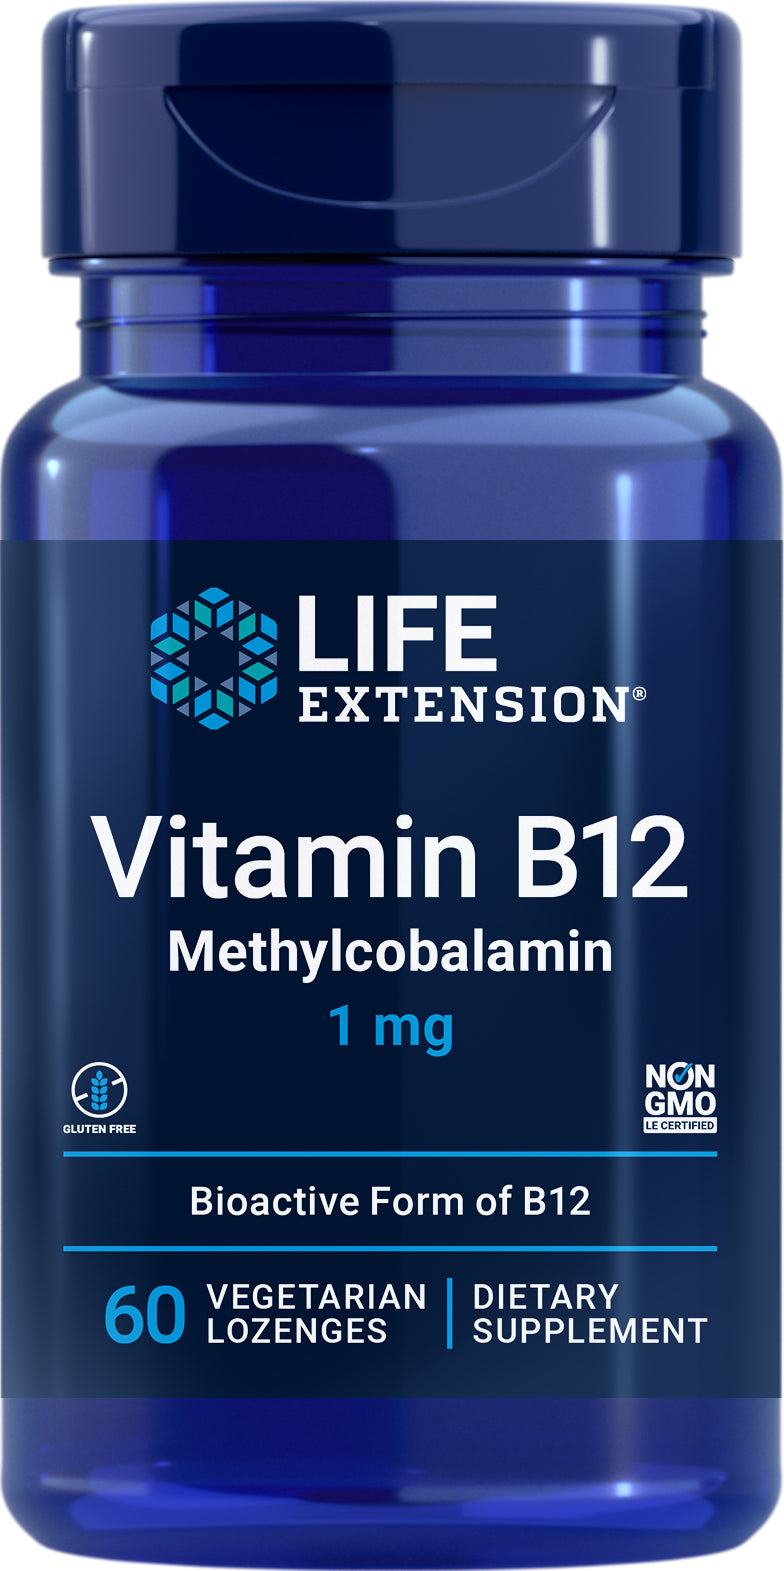 Vitamin B12 Methylcobalamin 1 mg, 60 veg lozenges by Life Extension